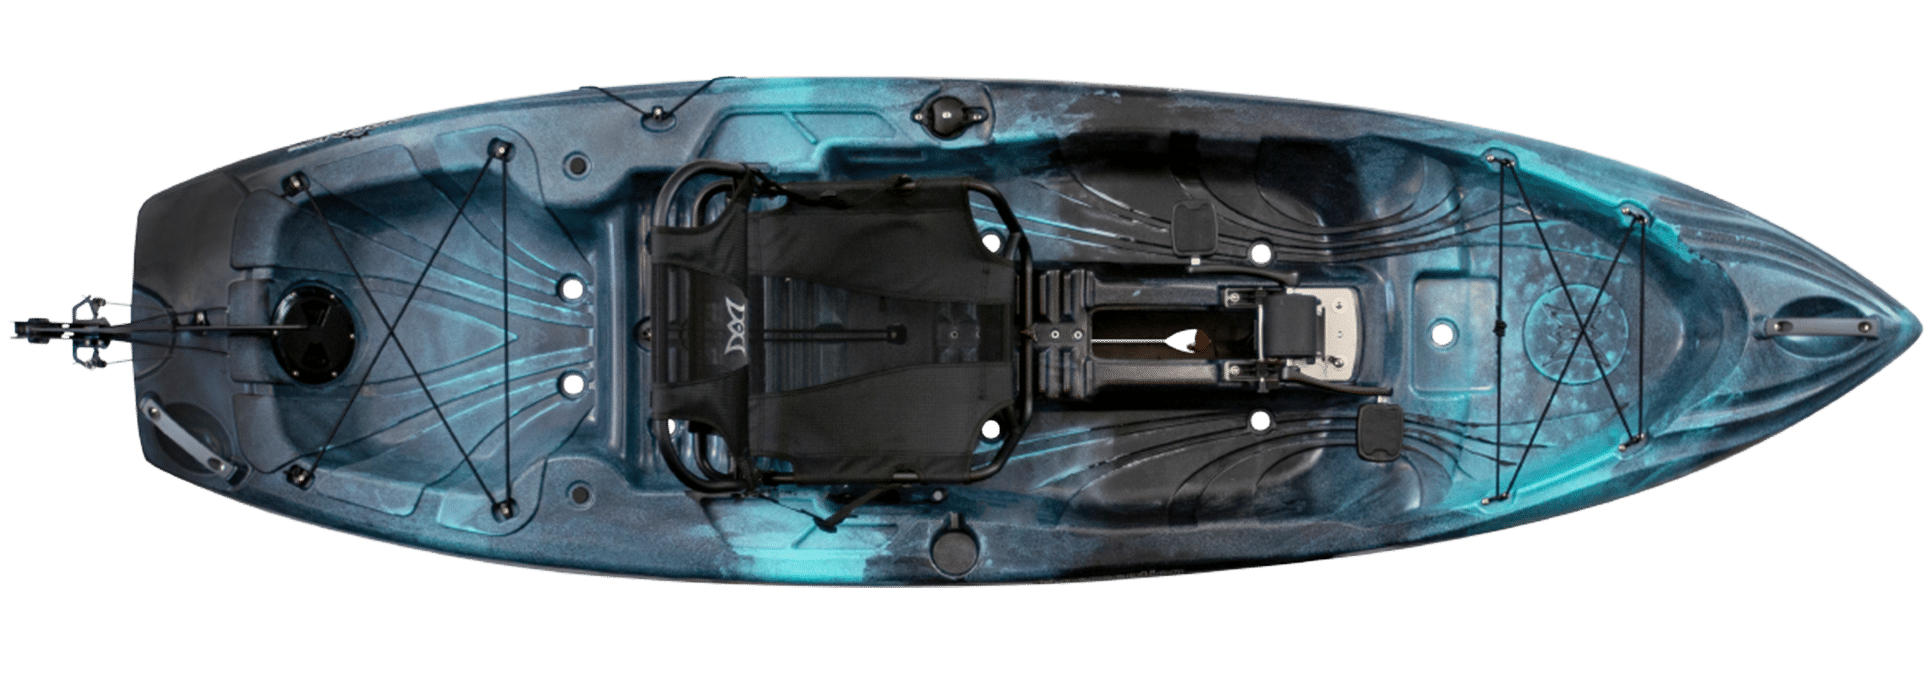 Showdown 11.5 Pedal Kayak—Designed for Fishing by Perception